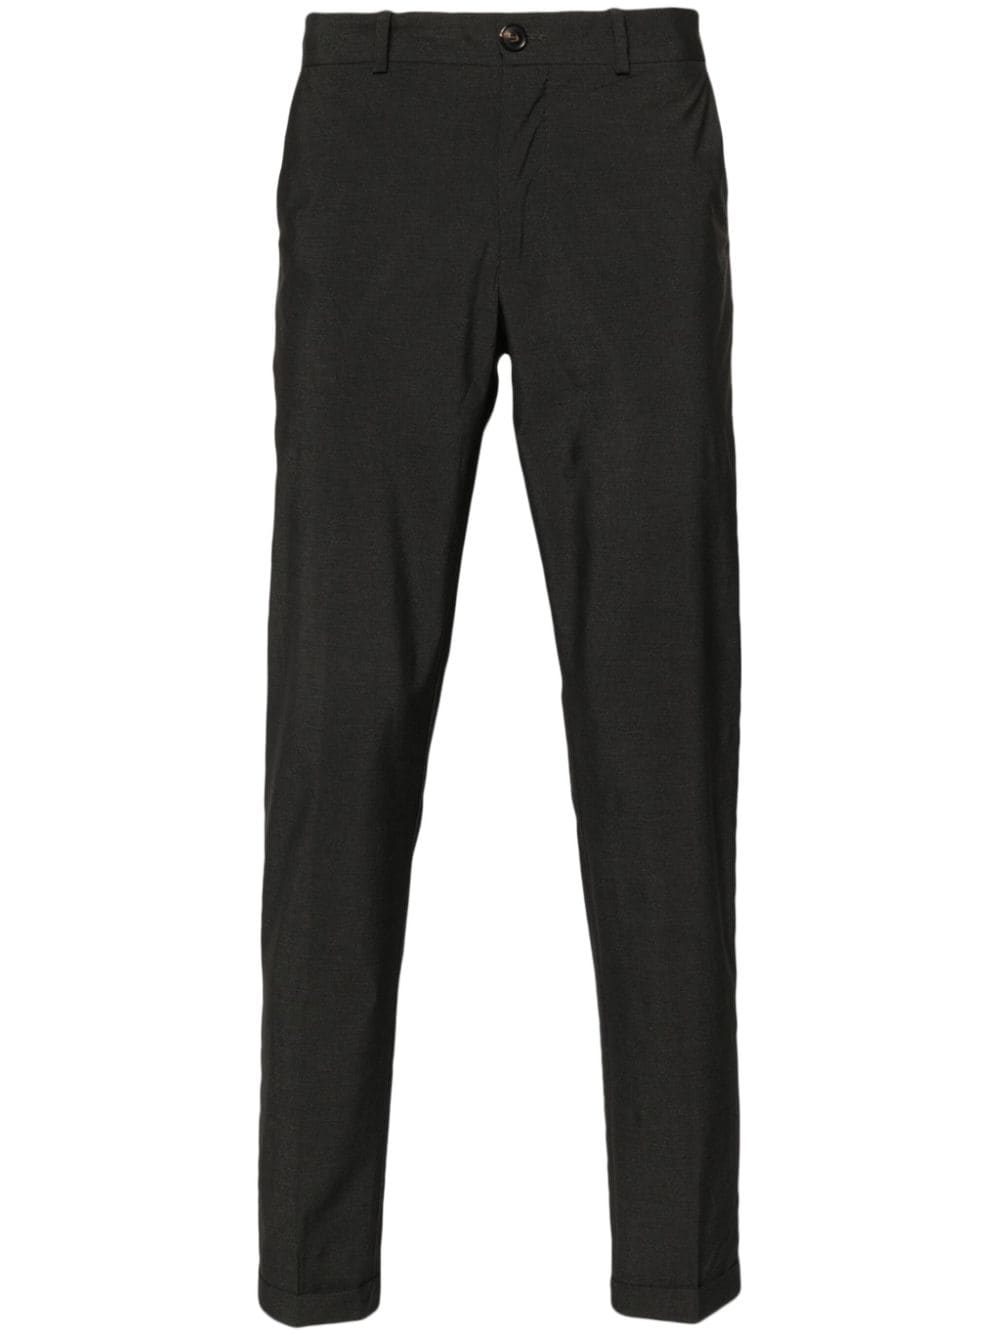 RRD Extralight chino trousers - Grau